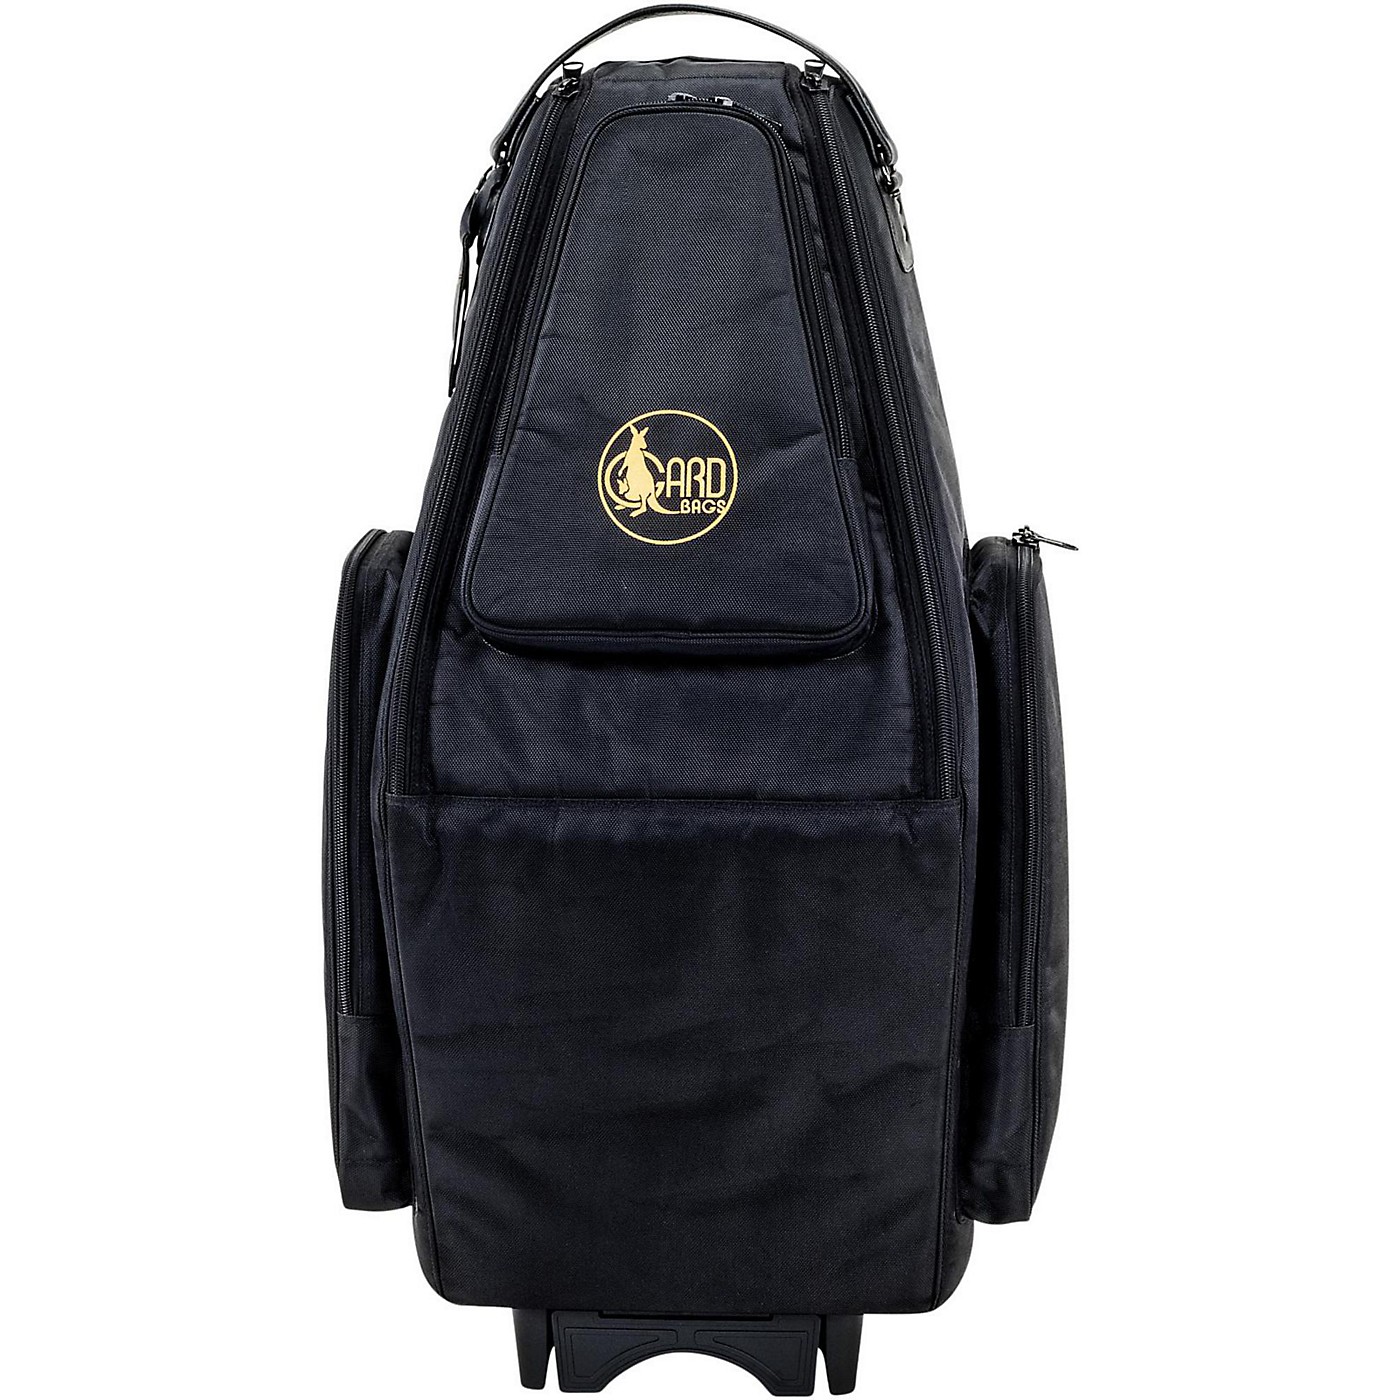 Gard Saxophone Wheelie Bag in Synthetic with Leather Trim Fits 2 Altos or Alto/Soprano 